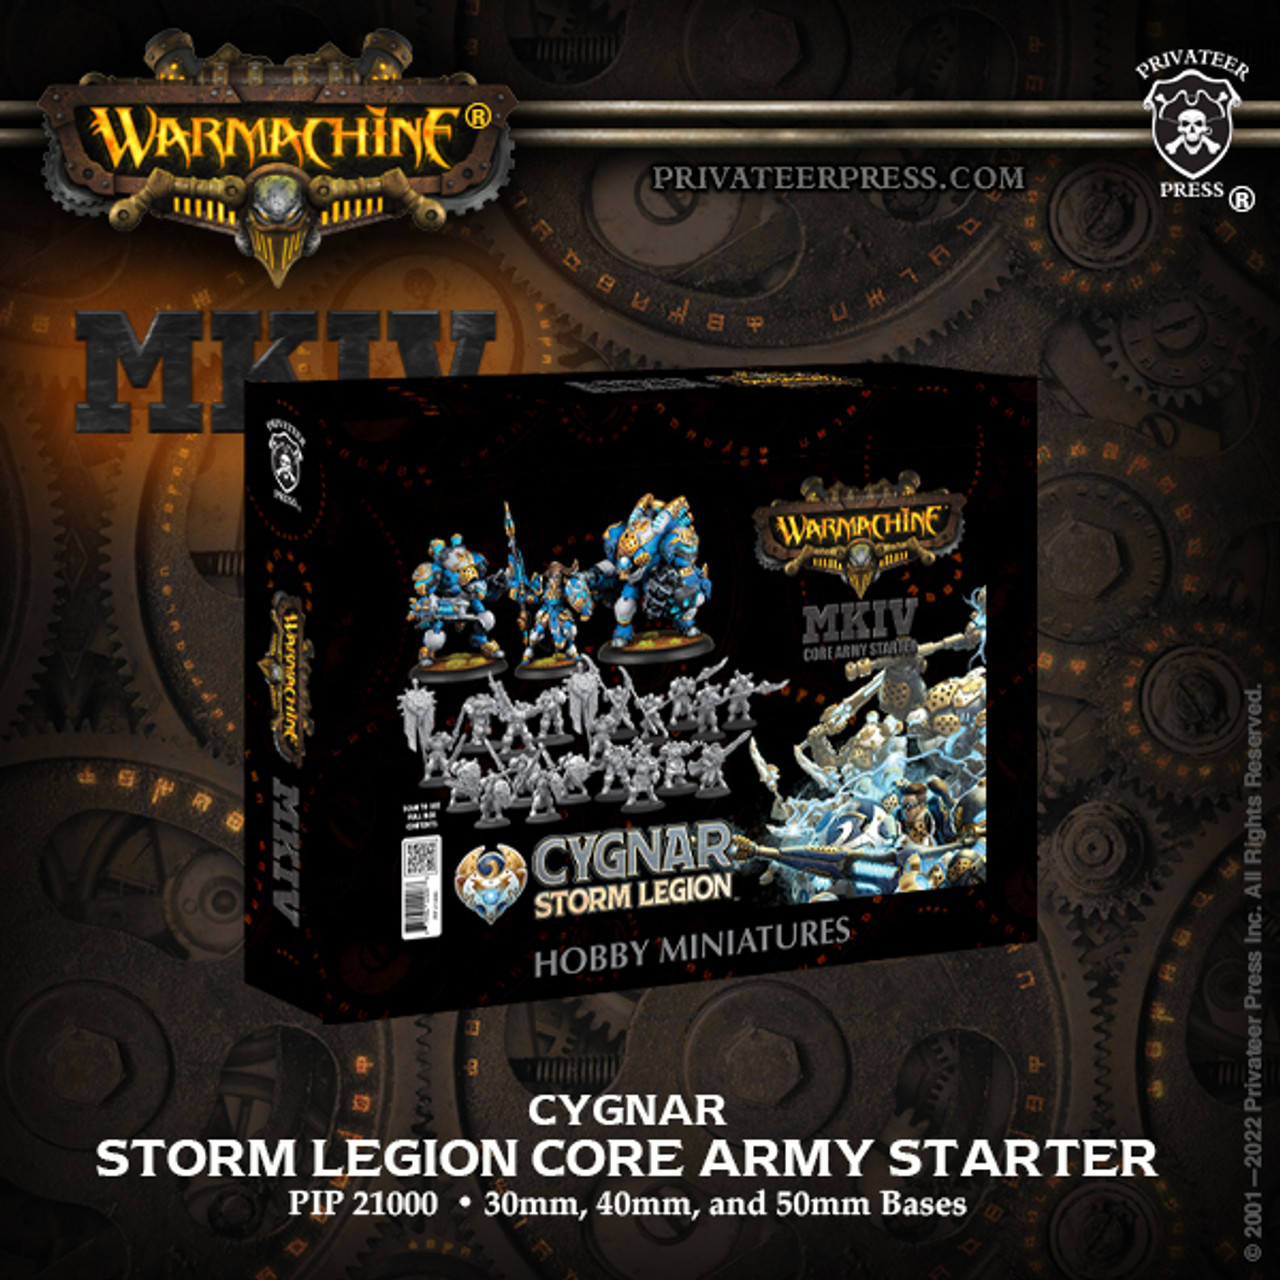 Cygnar Storm Legion Core Army Starter - Warmachine